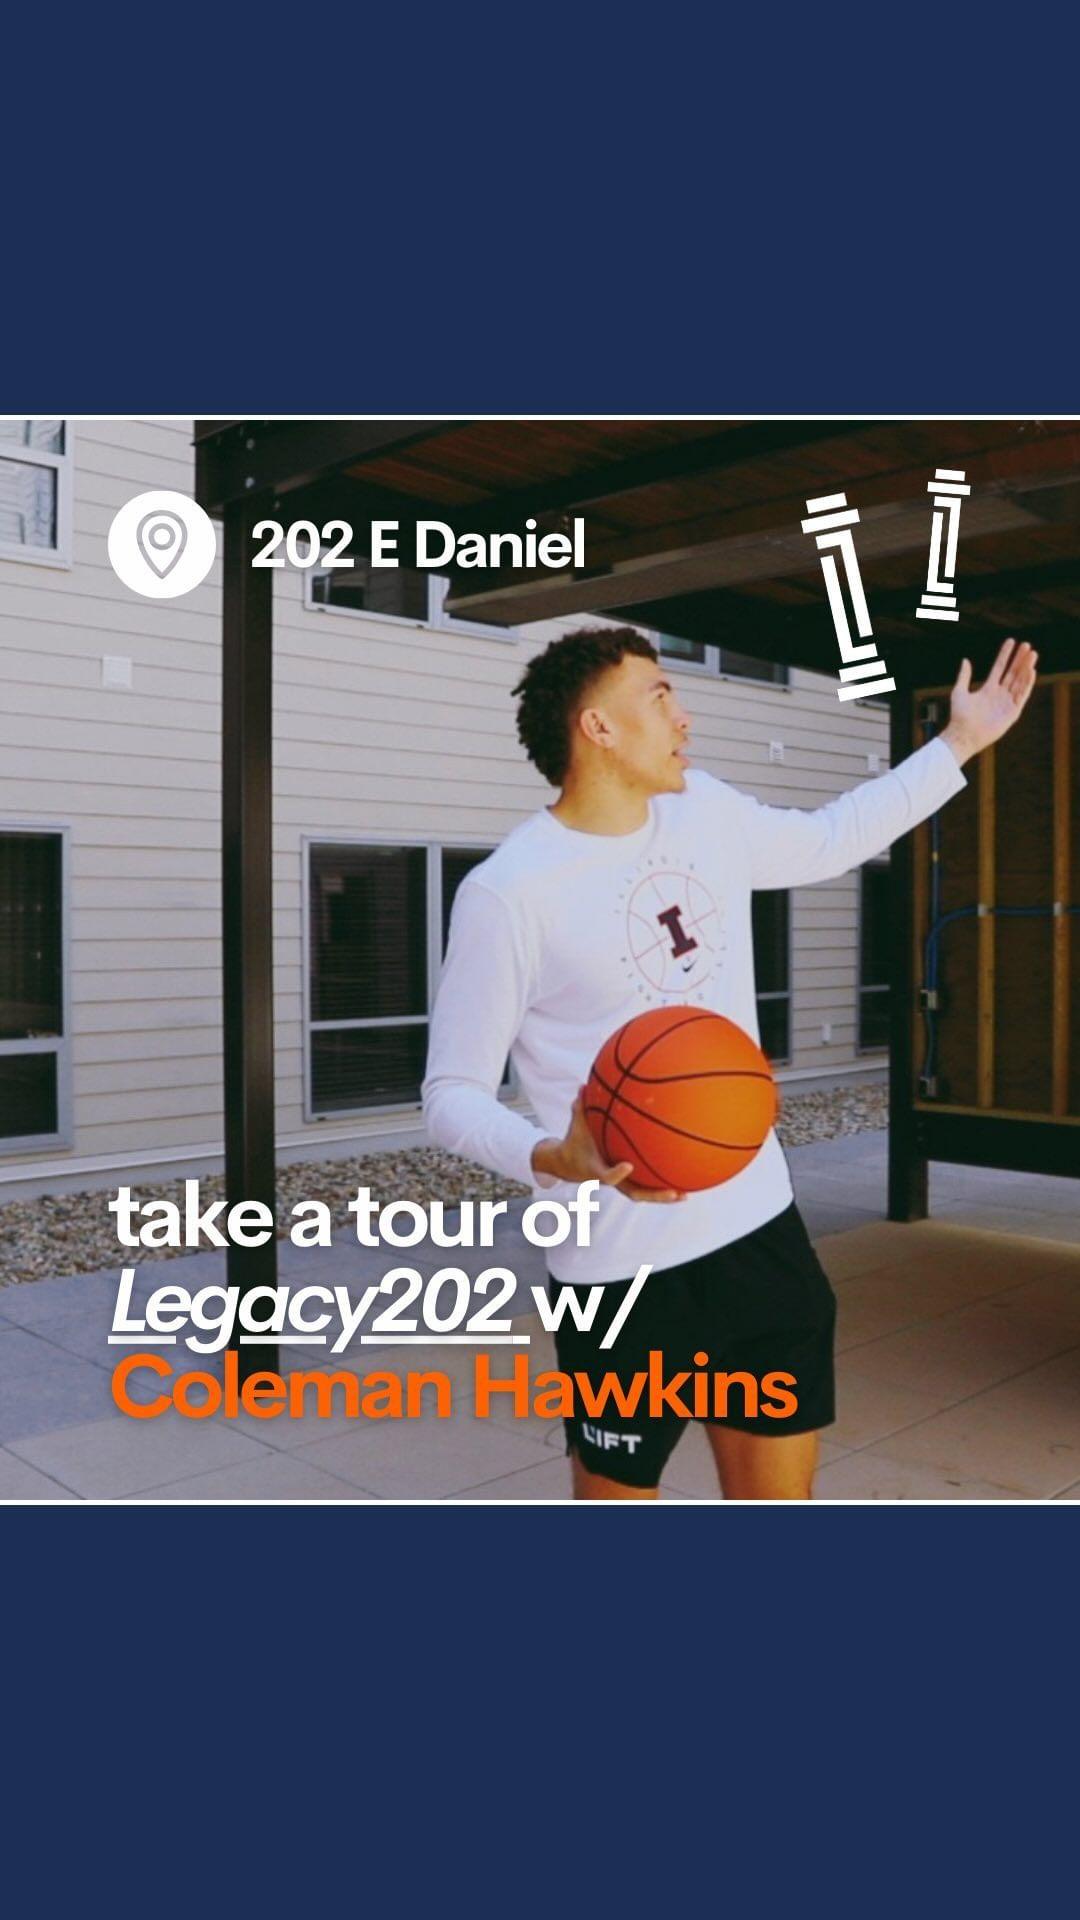 Coleman Hawkins Instagram Post Influencer Campaign